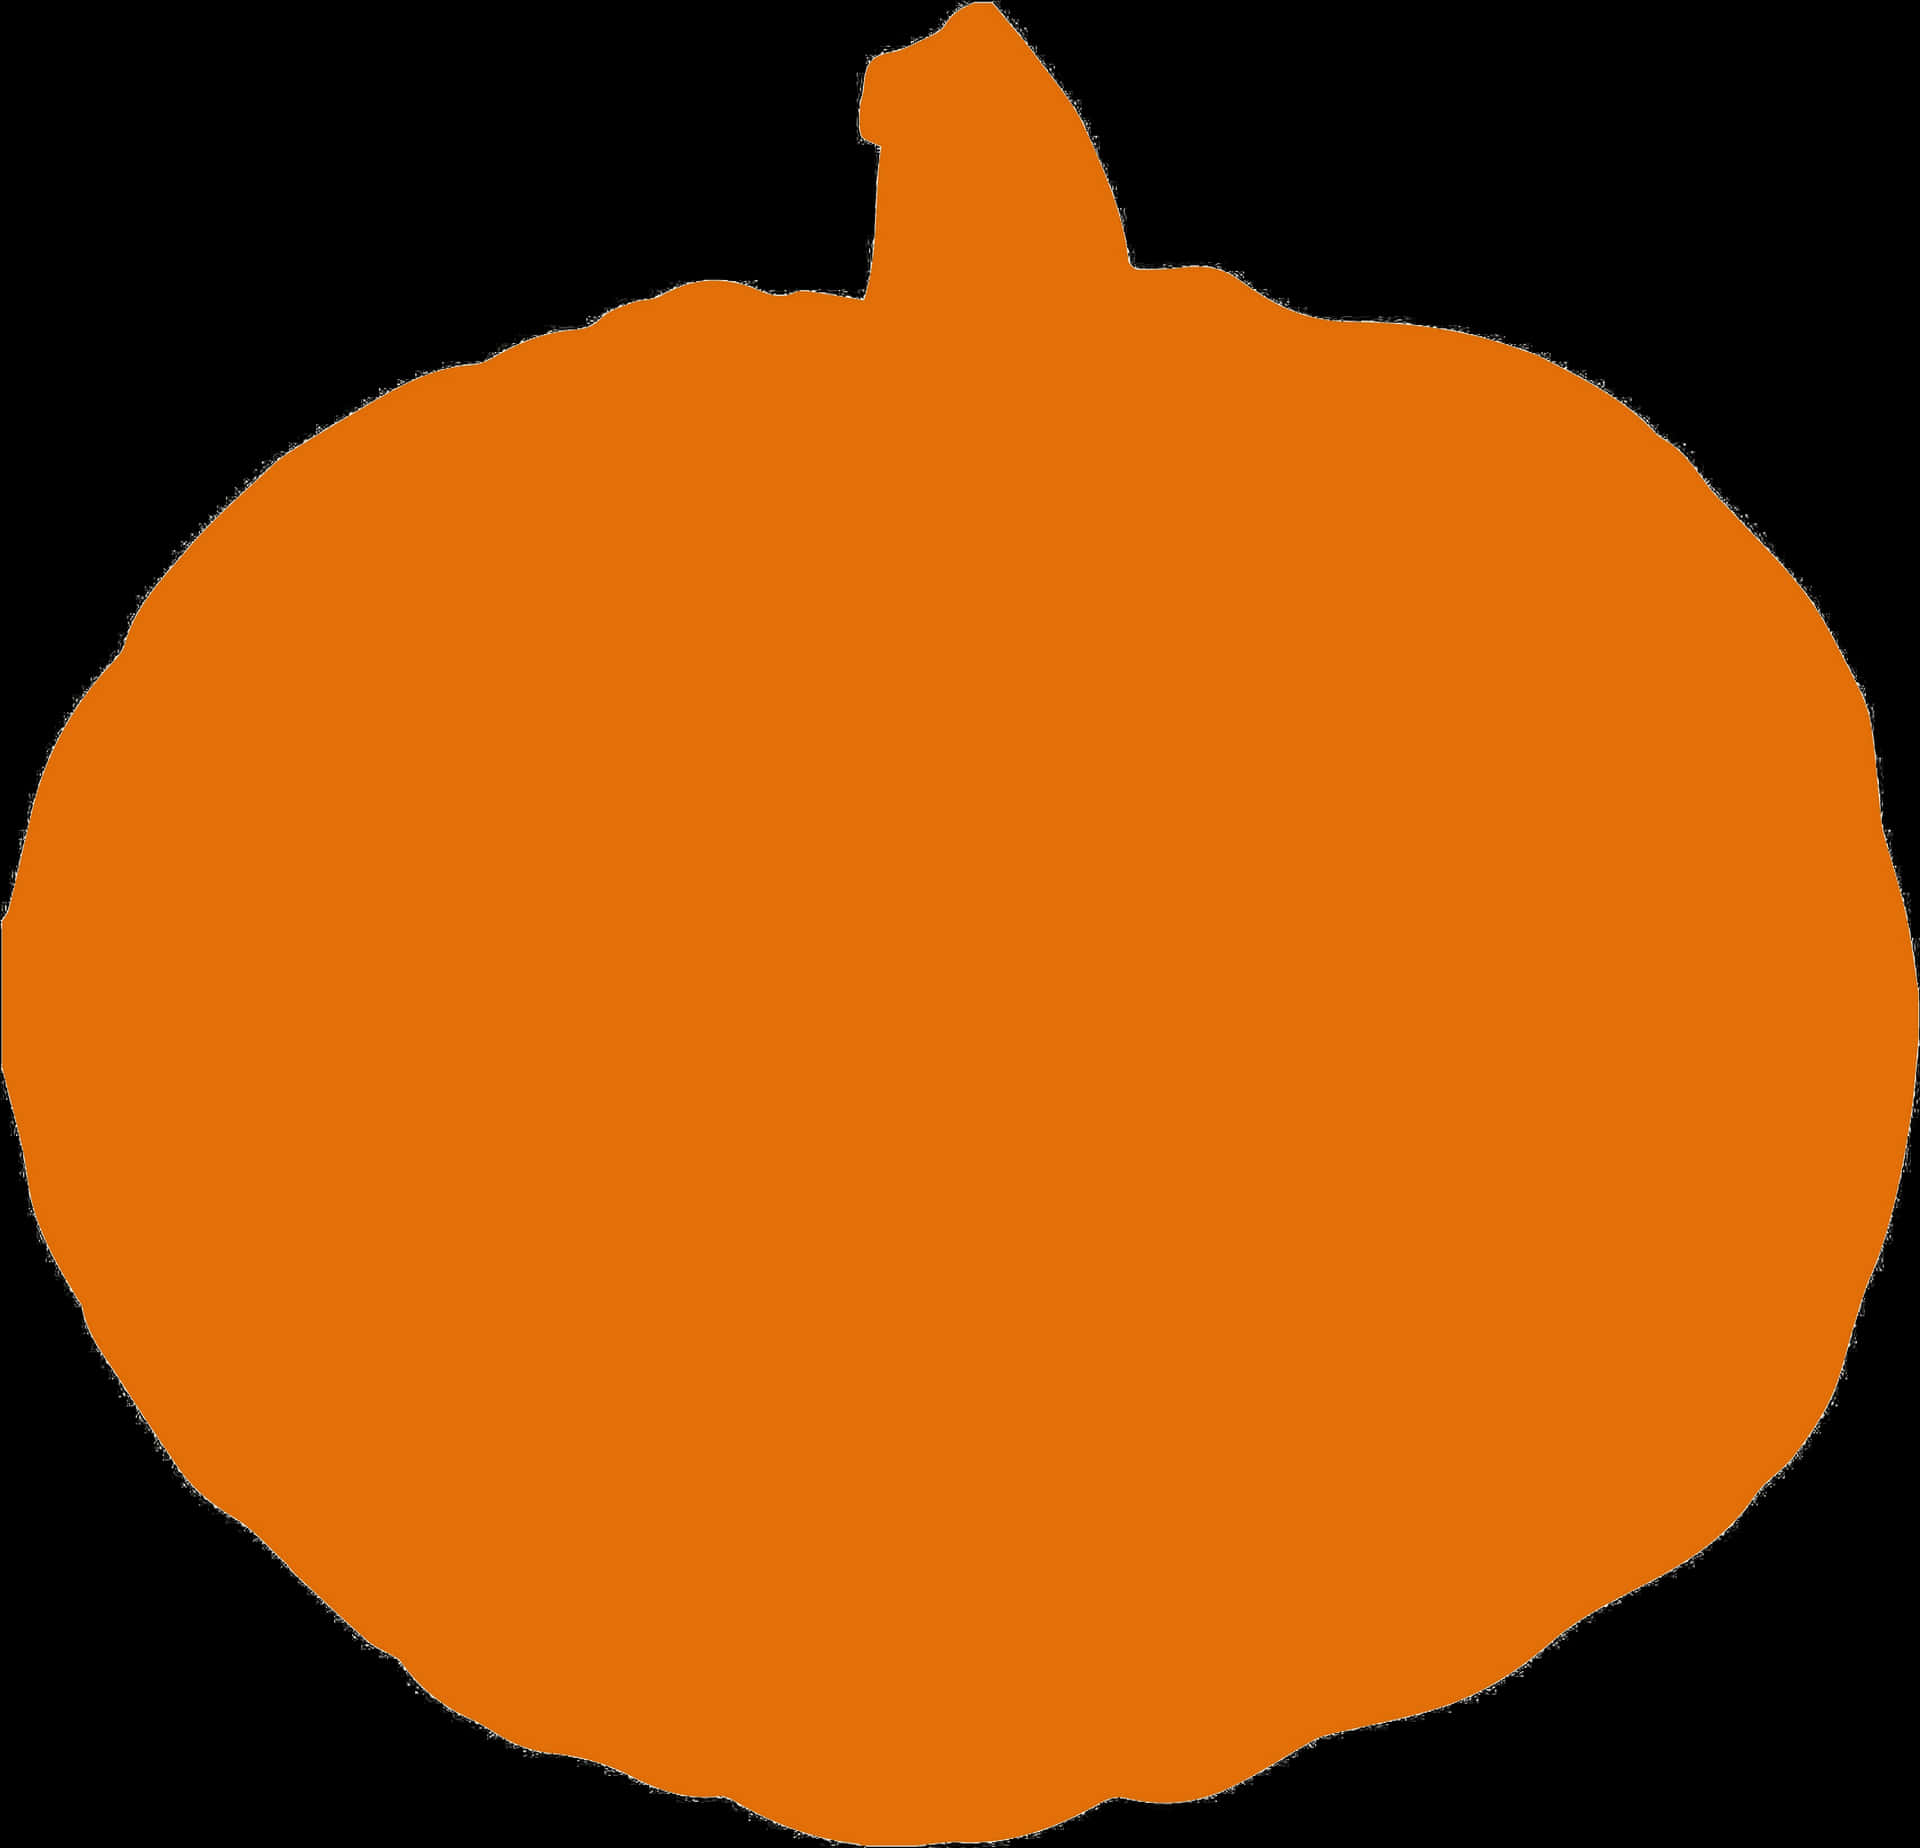 Orange Pumpkin Silhouette PNG image